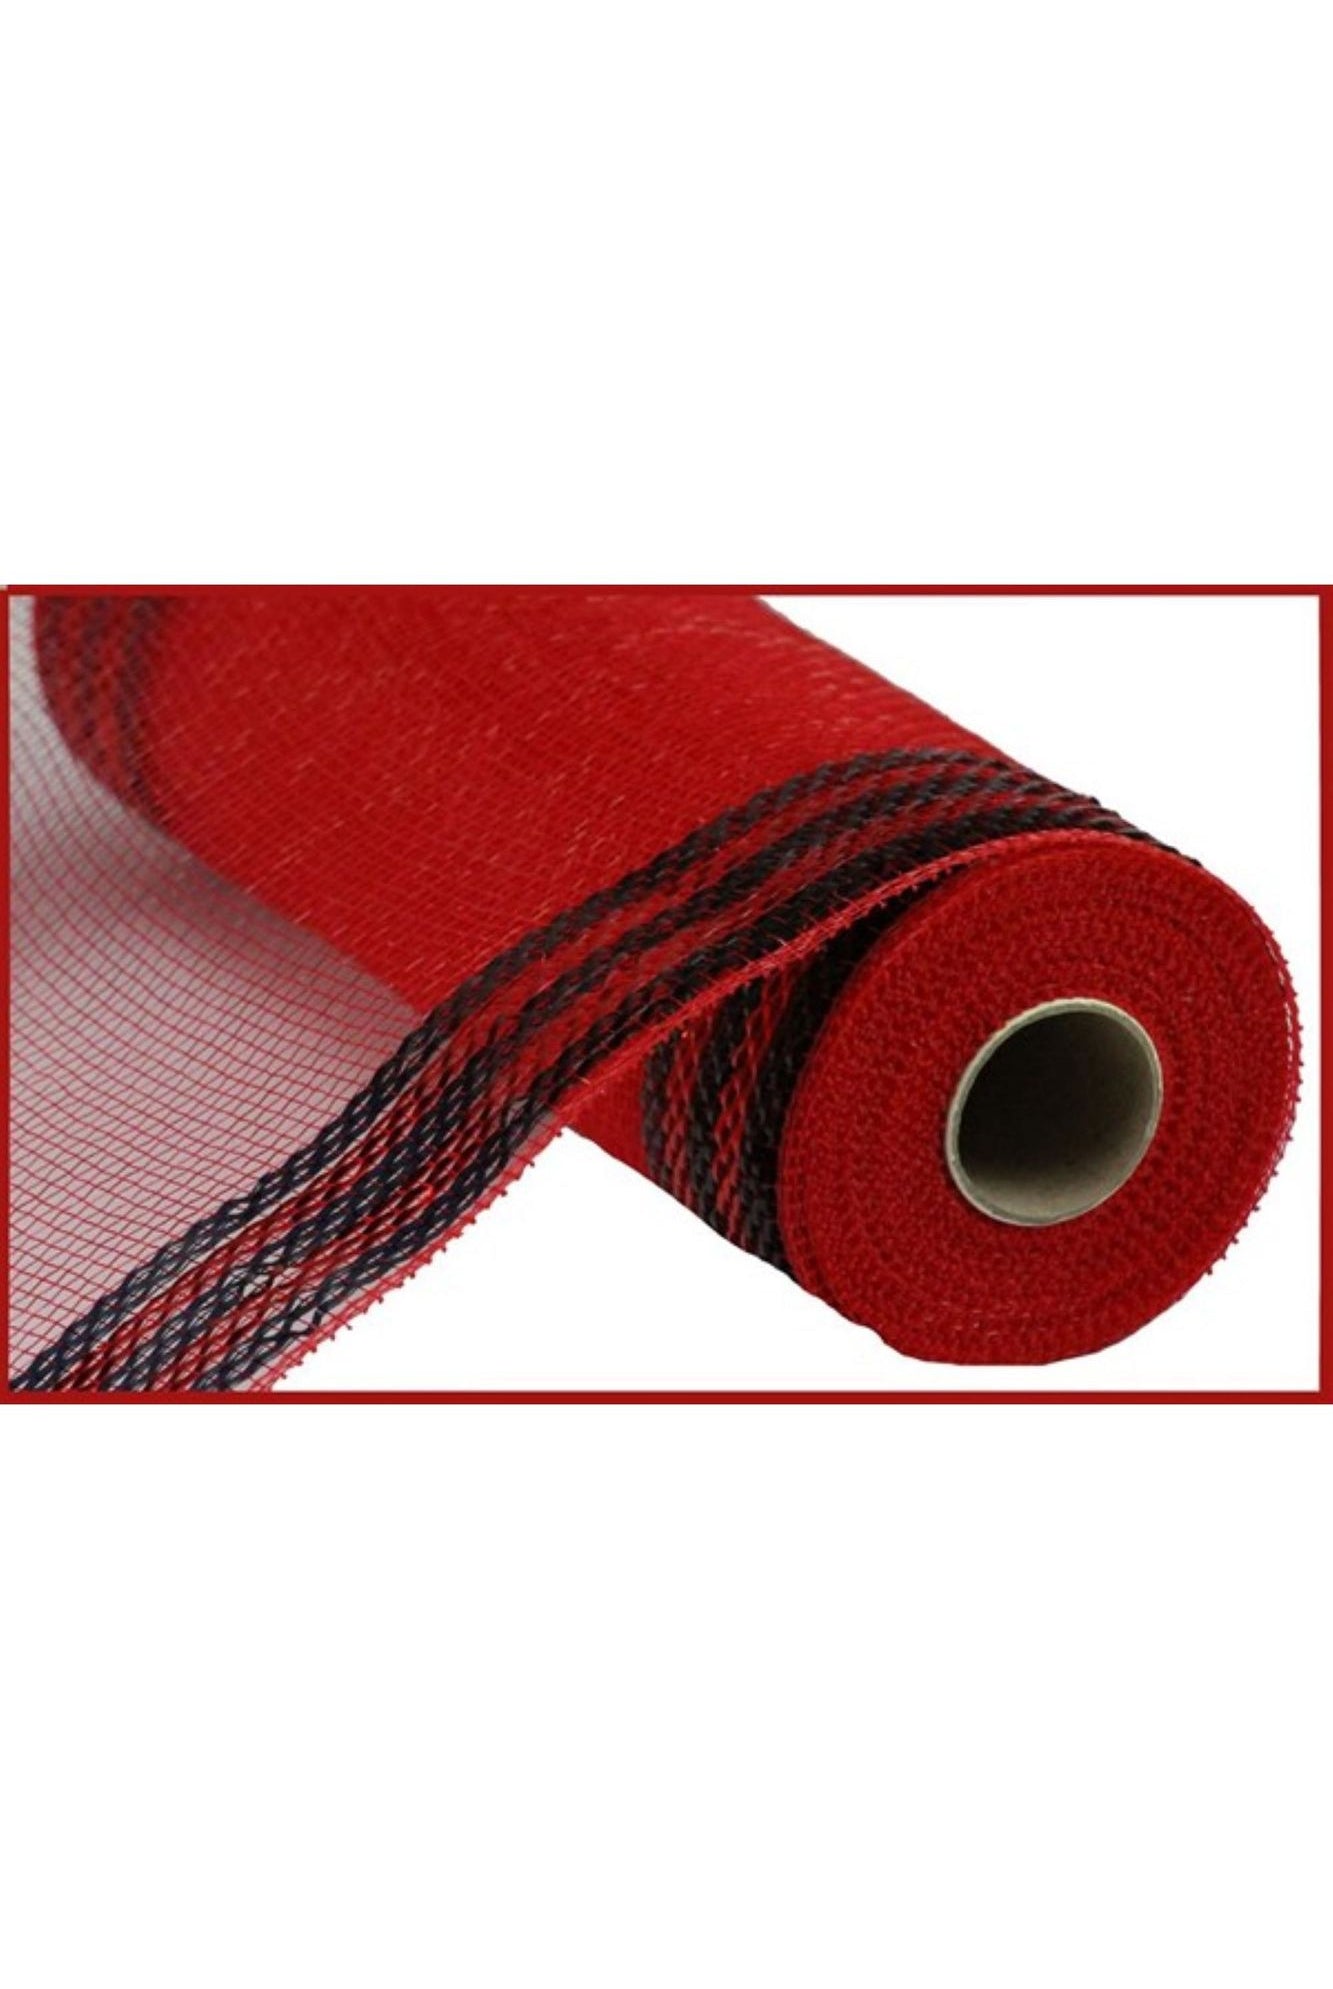 10" Border Stripe Metallic Mesh: Red/Black (10 Yards) - Michelle's aDOORable Creations - Poly Deco Mesh